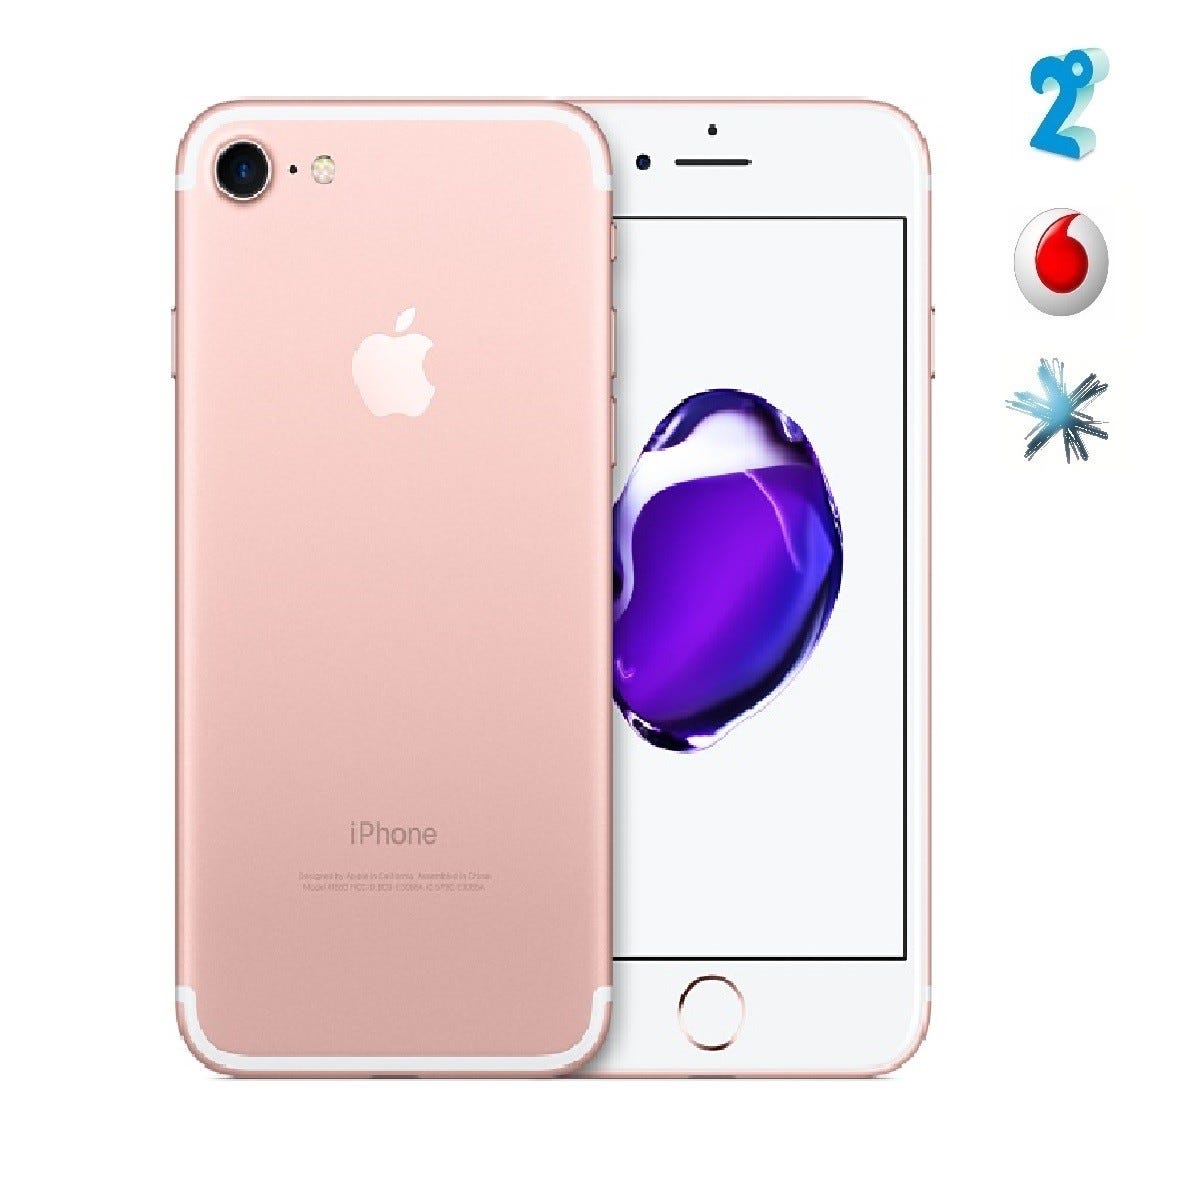 Apple iPhone 7 Plus 32GB Factory Unlocked CDMA/GSM Smartphone — Rose Gold  (Certified Refurbished) | by Shubham Sharma | Medium